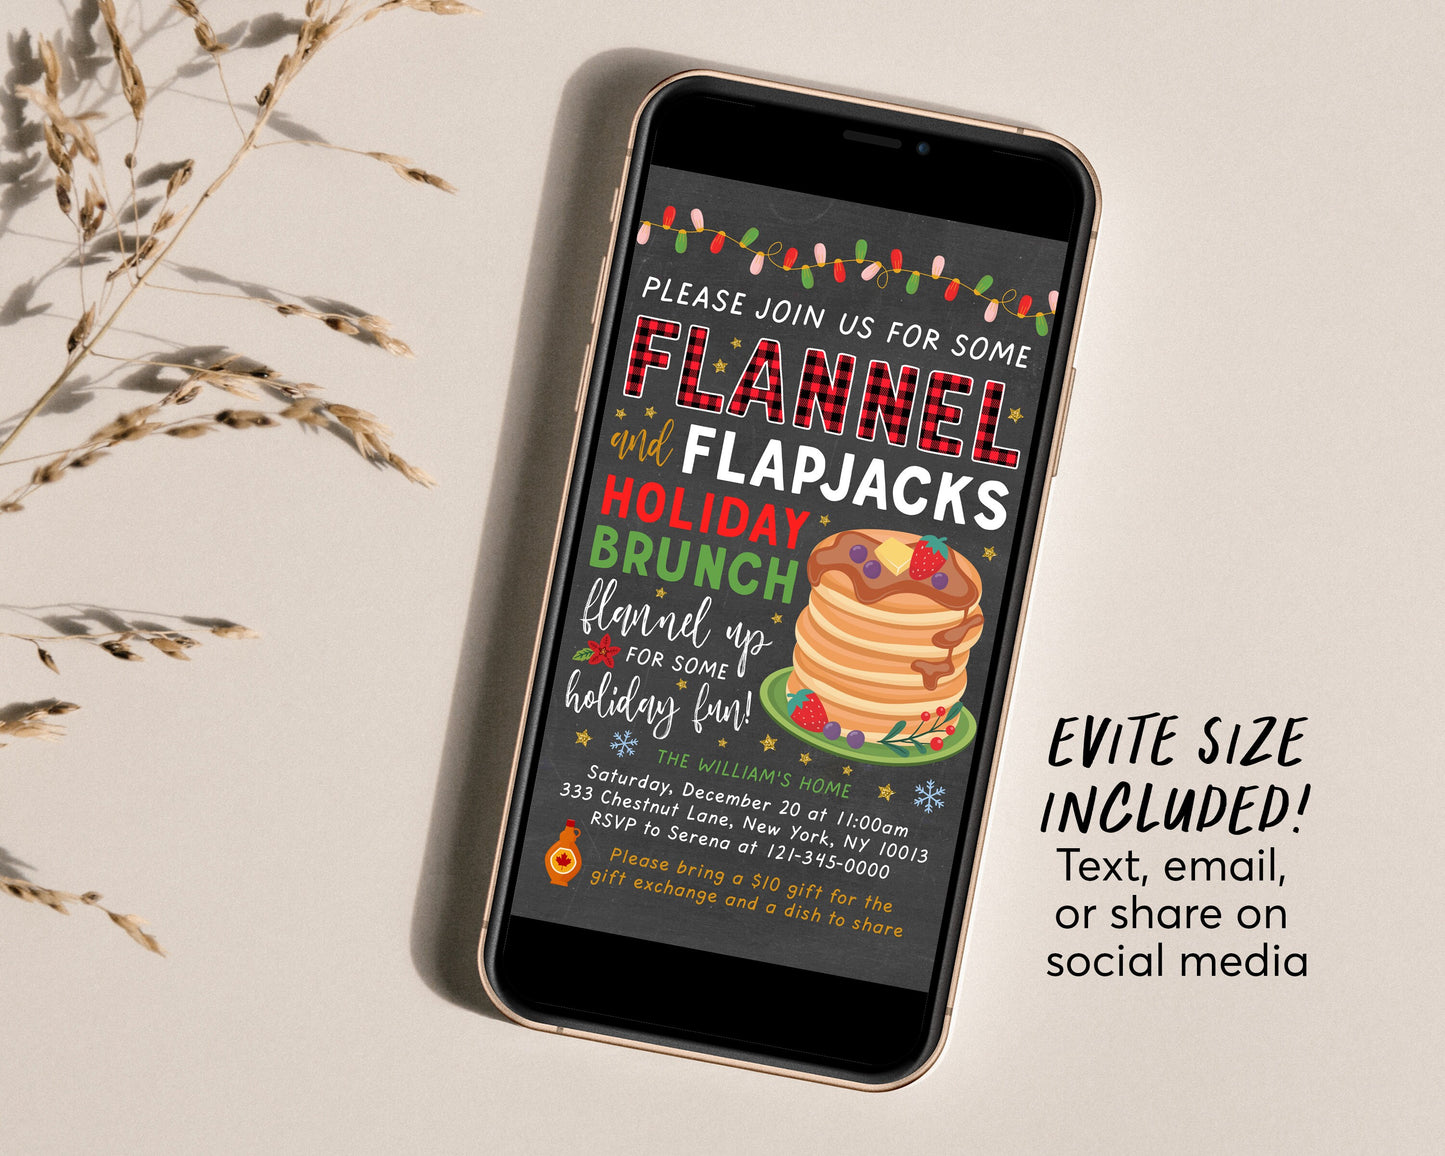 Flannel and Flapjacks Holiday Brunch Invitation Editable Template, Pancakes and Pajamas Christmas, Xmas Party Buffalo Plaid Holiday Invite